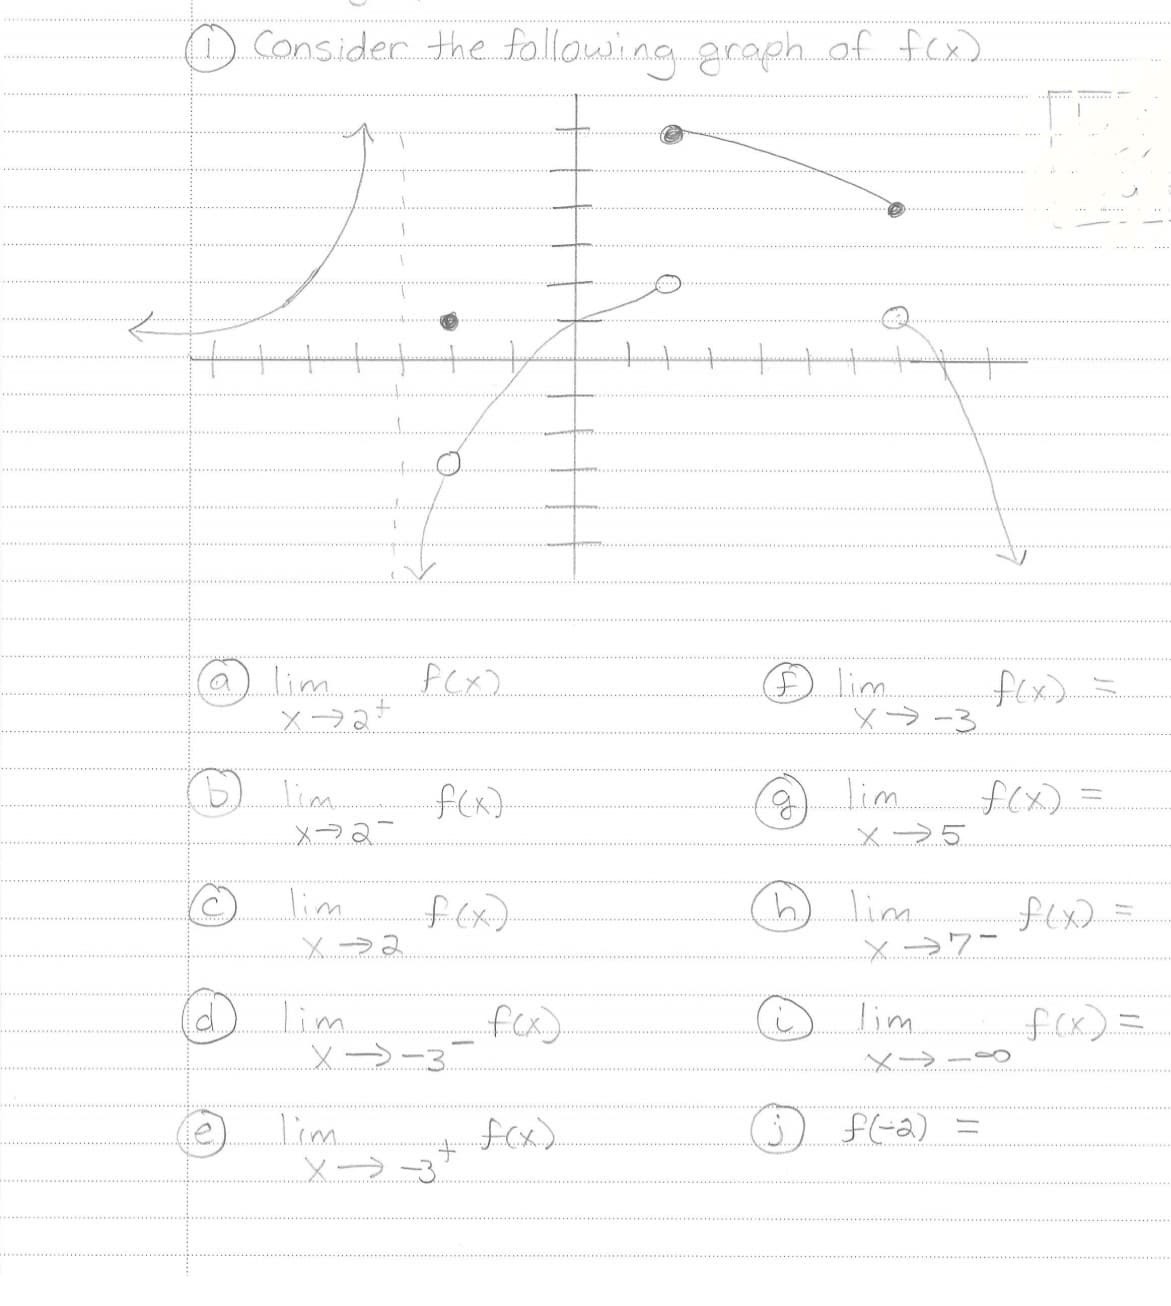 Ⓒ. Consider the following graph of f(x).
4
a
Tim
X→ 2³
B. lim...
X-2-
lim.
at
1
X → 2
I'im
F(x)
f(x)
f(x).
Tim
X--3-
F
X-3..
f(x)...
f(x)..
£ lim.
g.
i
X-3
(3)
Tim
(6) lim
x → 5
Tim
..........
f(x) =
f(x) =
X→7-
f(-2) =
f(x) =
f(x) =